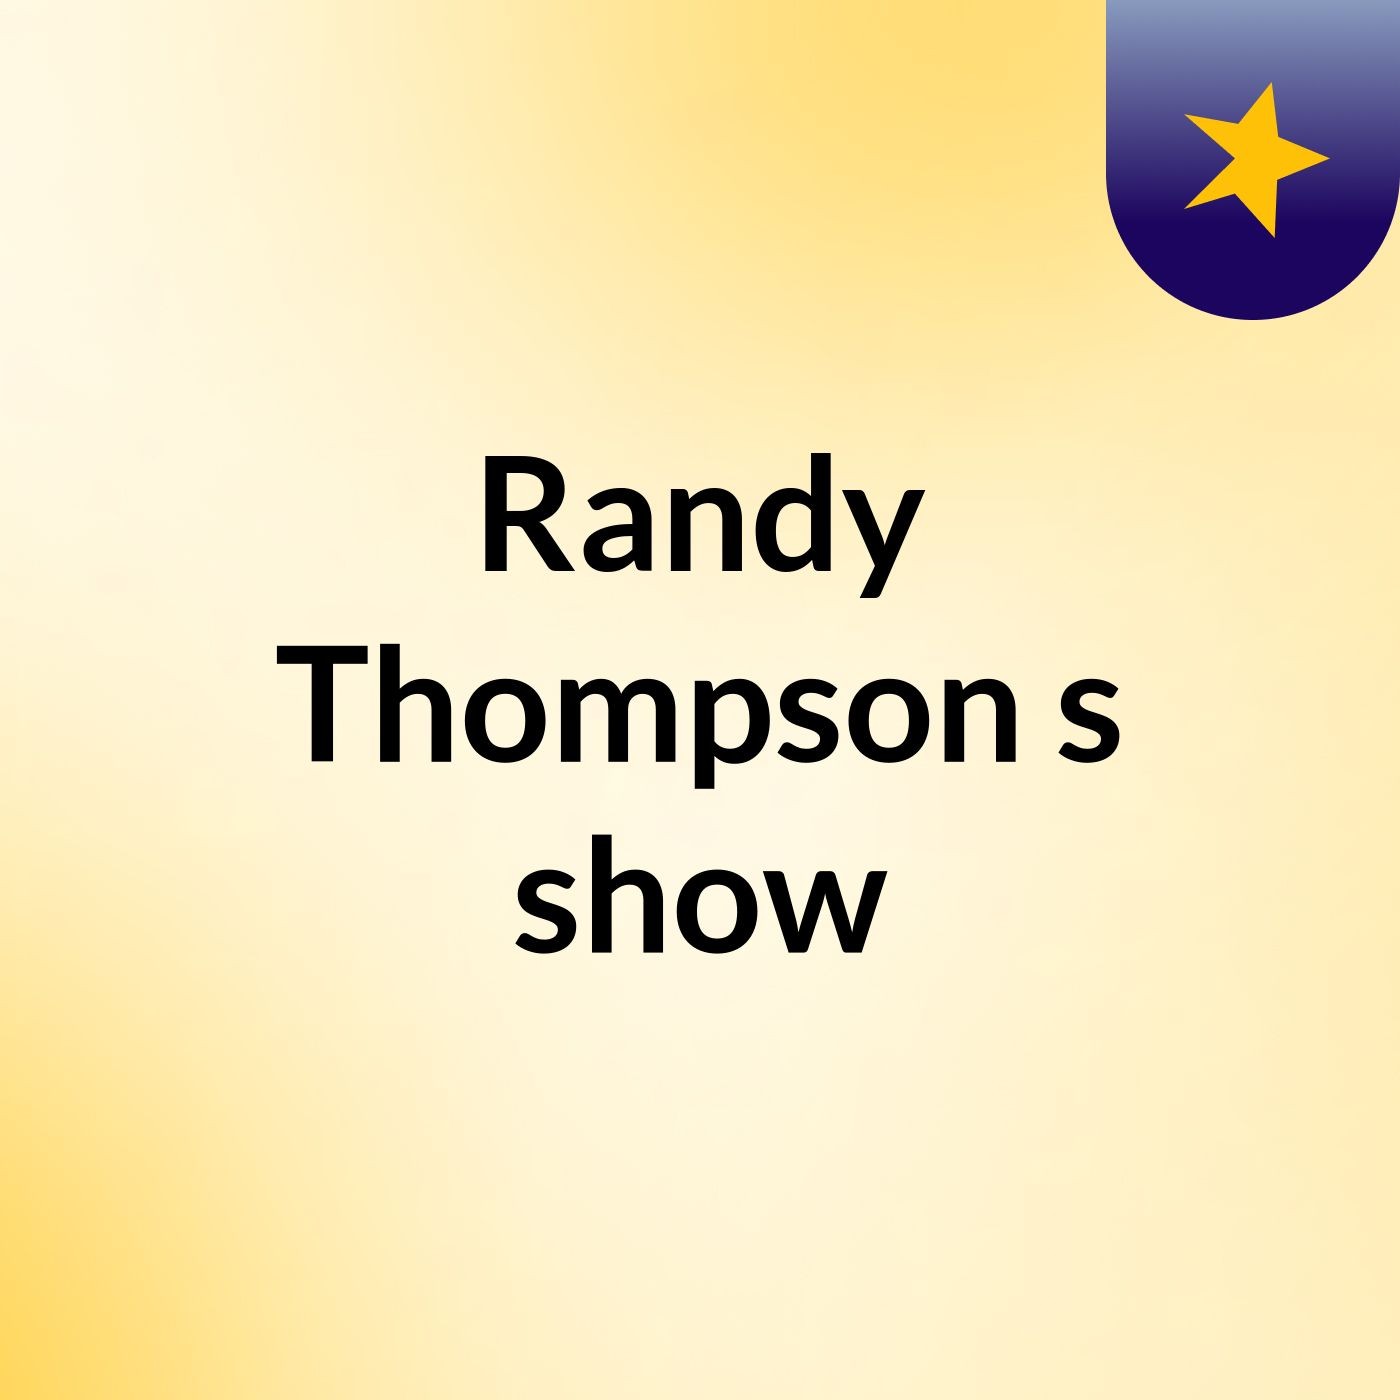 Randy Thompson's show